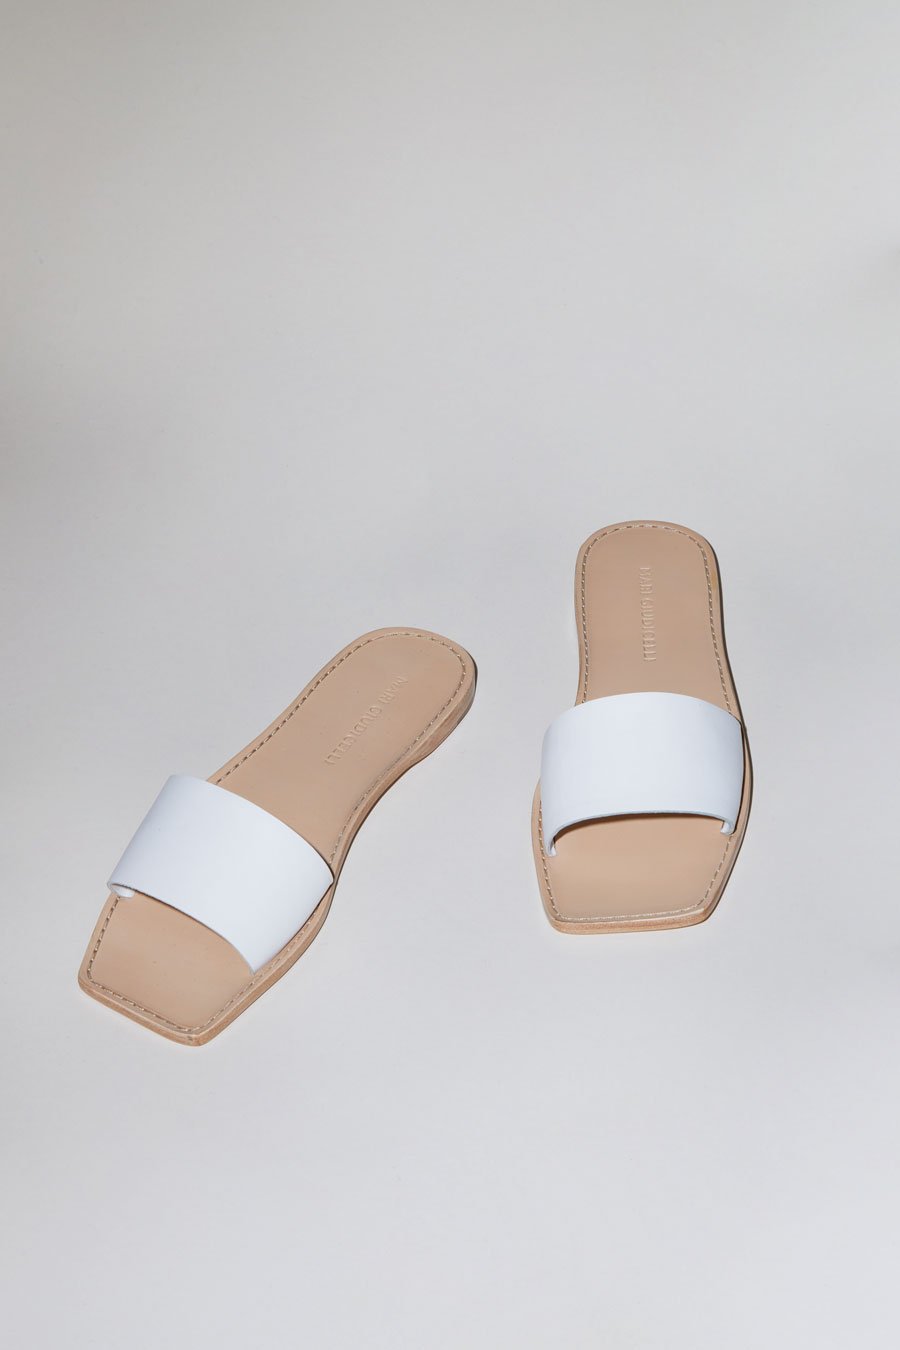 Very Goods | Mari Giudicelli Porto Sandal in White